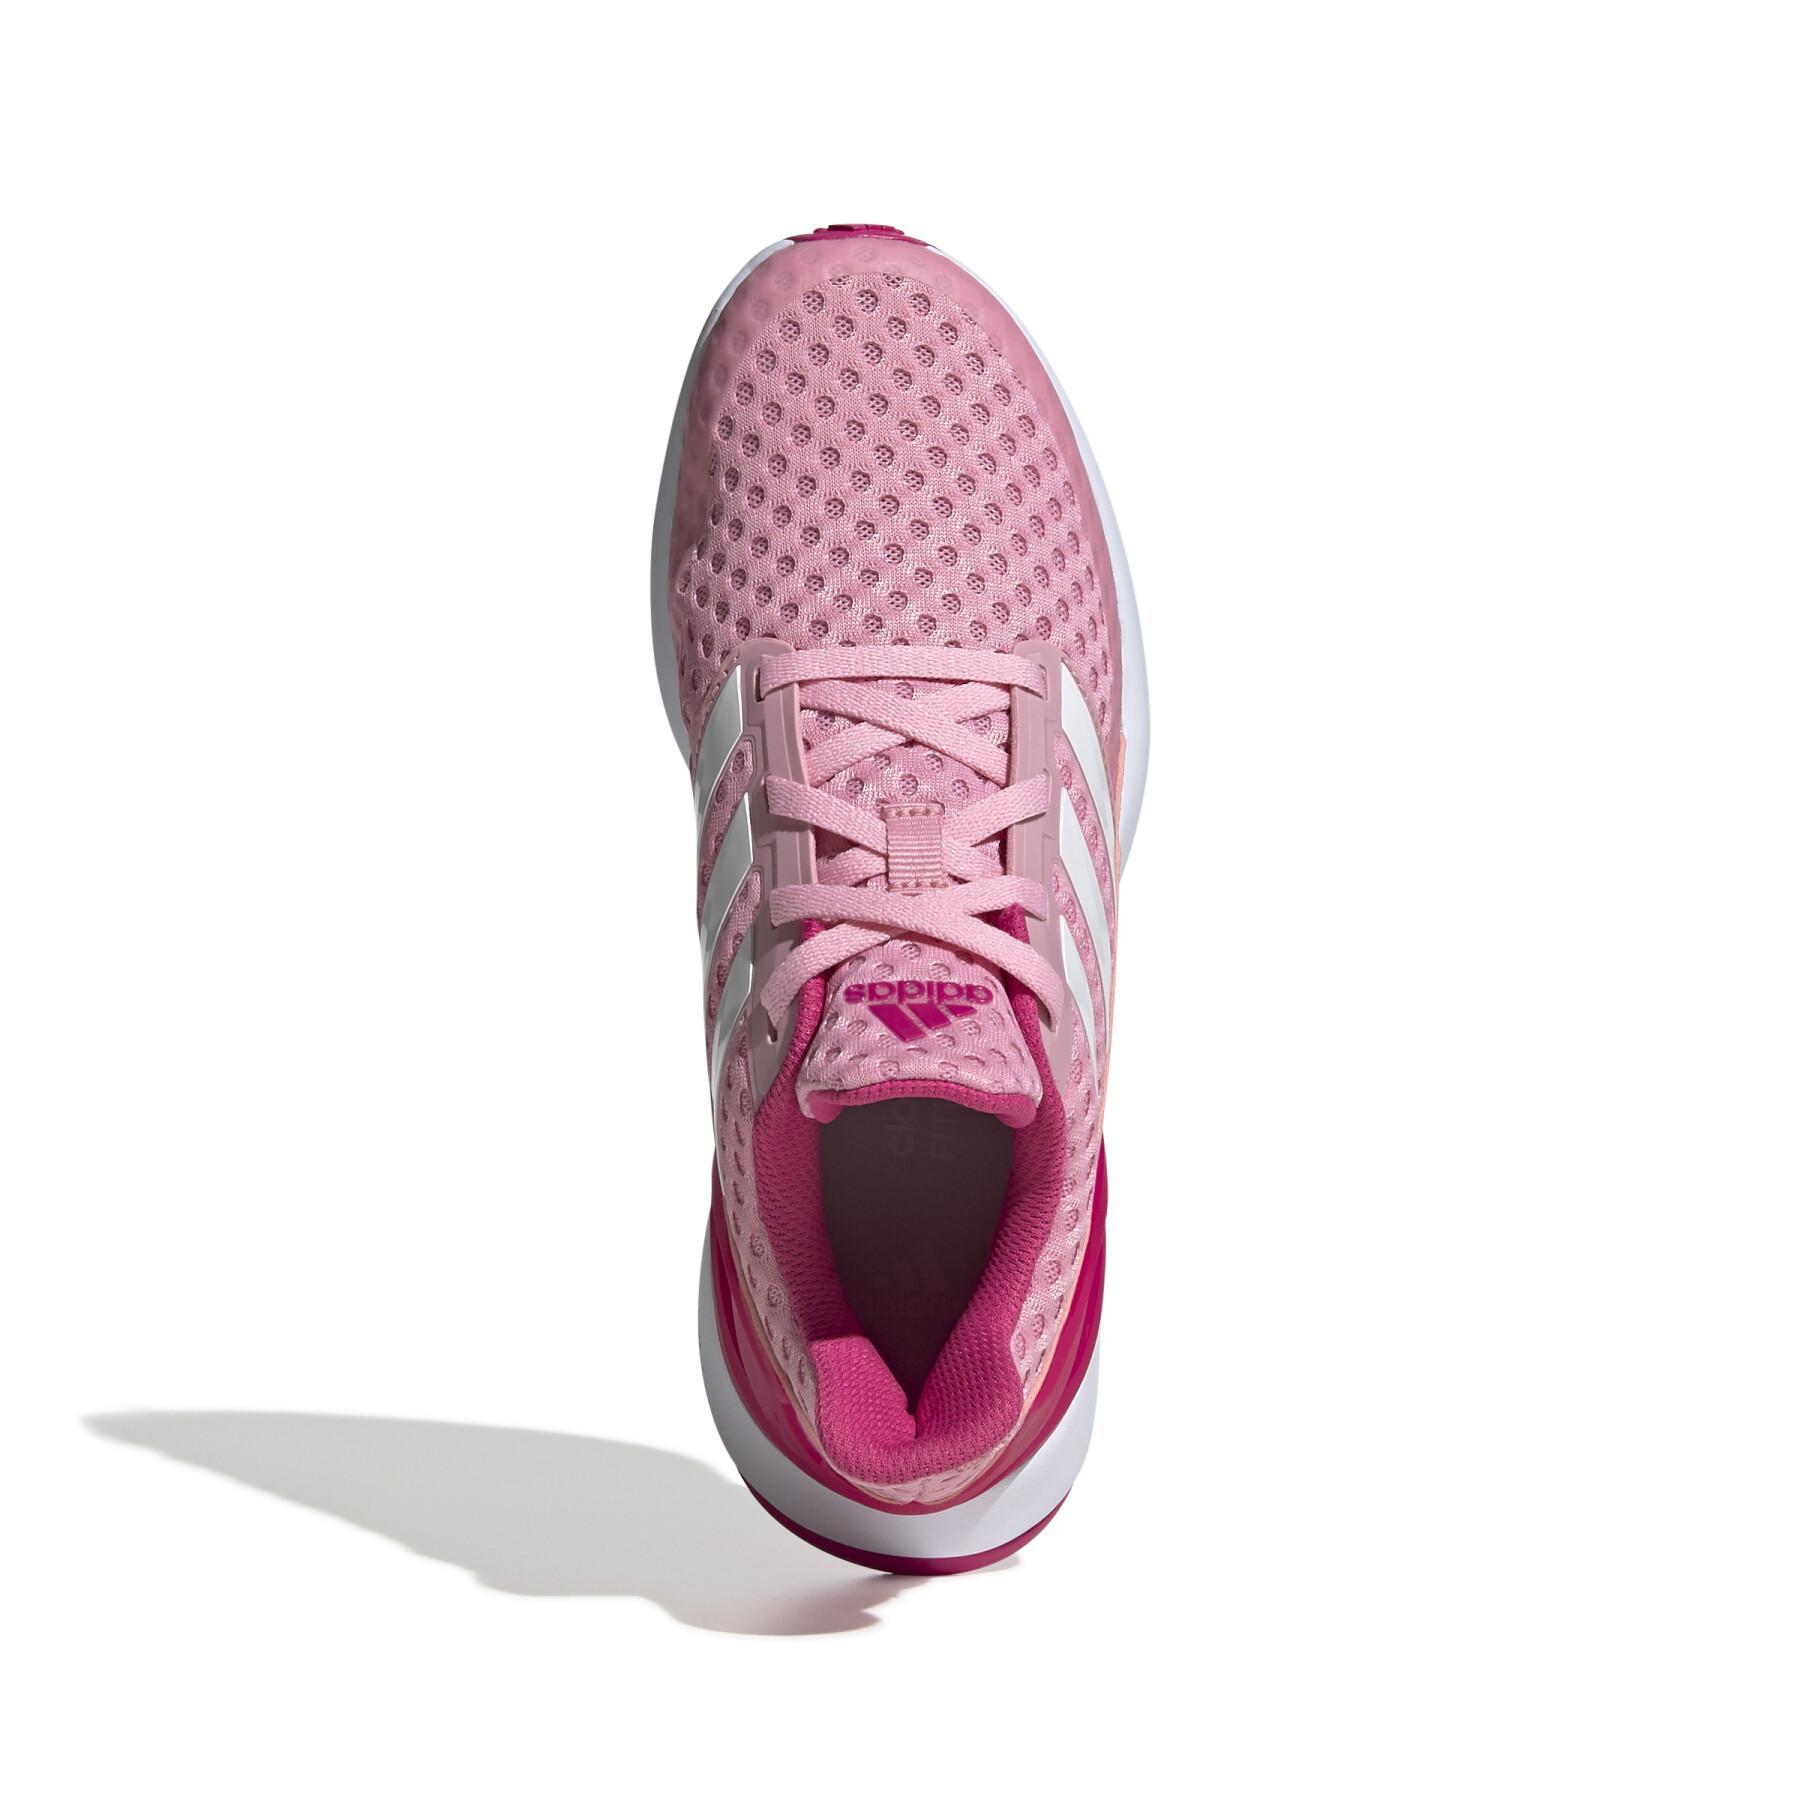 Chaussures de running enfant adidas RapidaRun